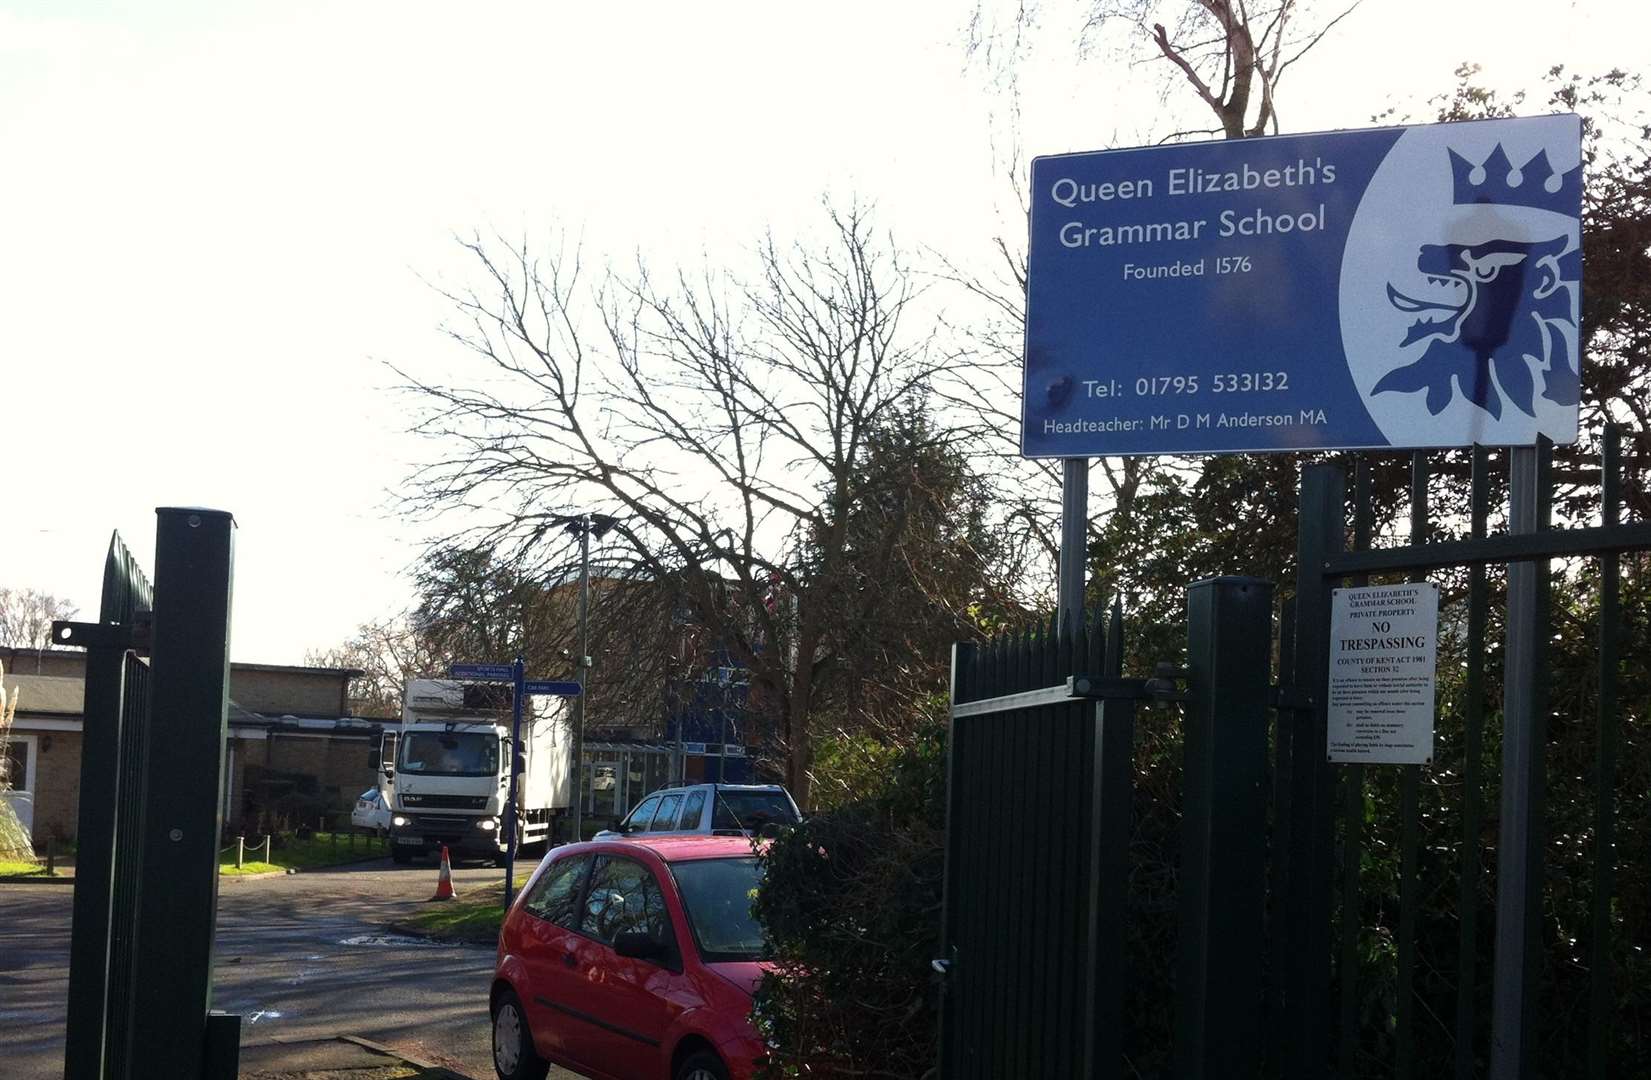 Queen Elizabeth's Grammar School in Abbey Place, Faversham